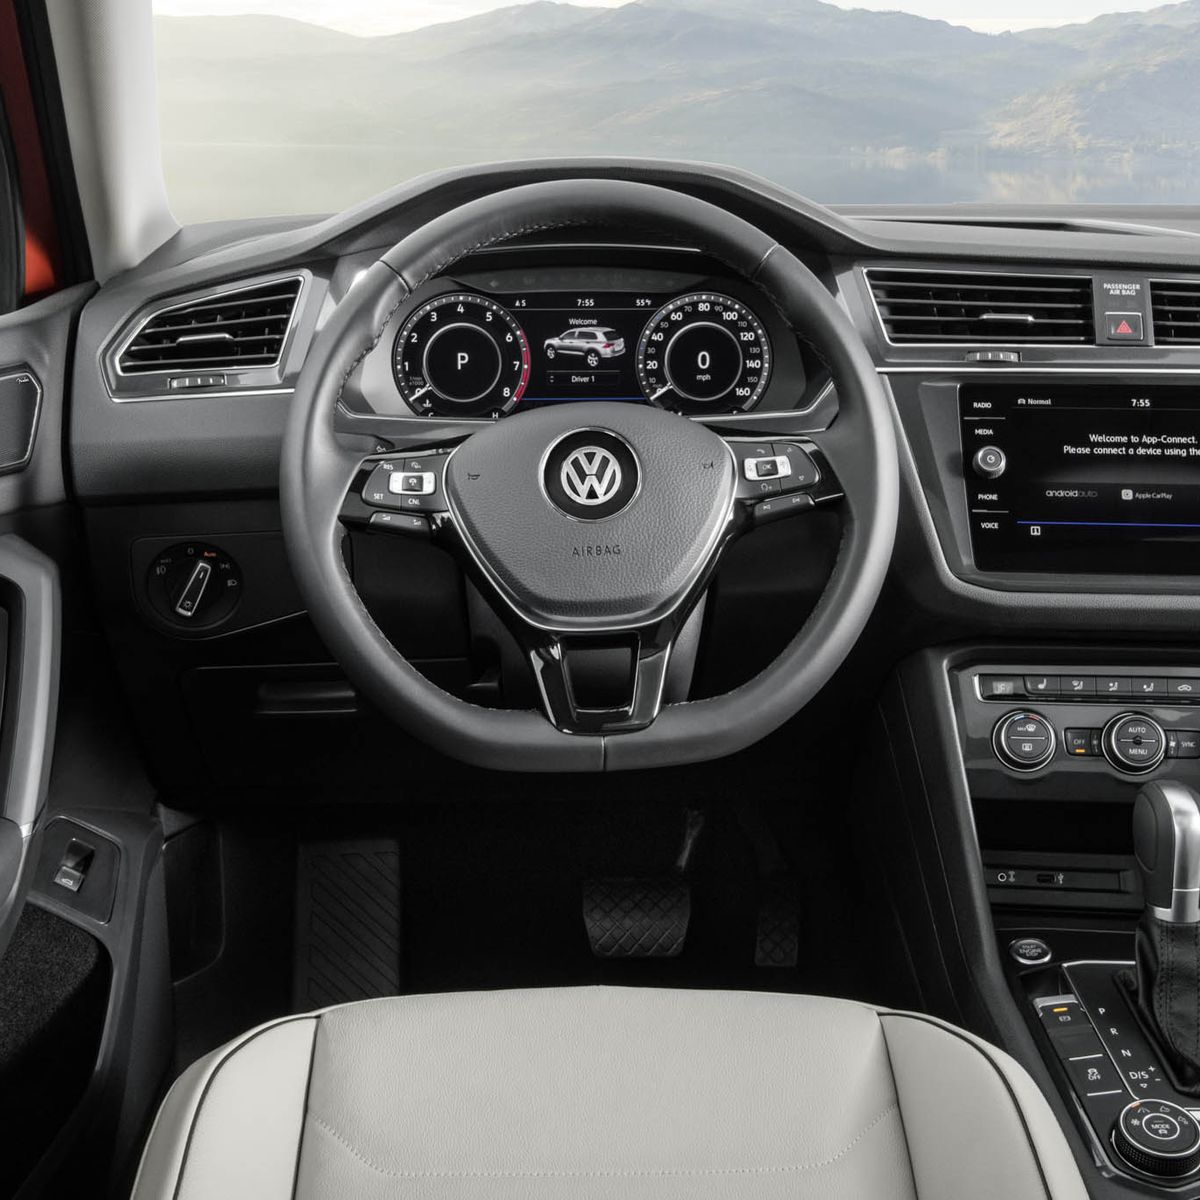 Volkswagen Introduces New Engine In 2018 Tiguan, News